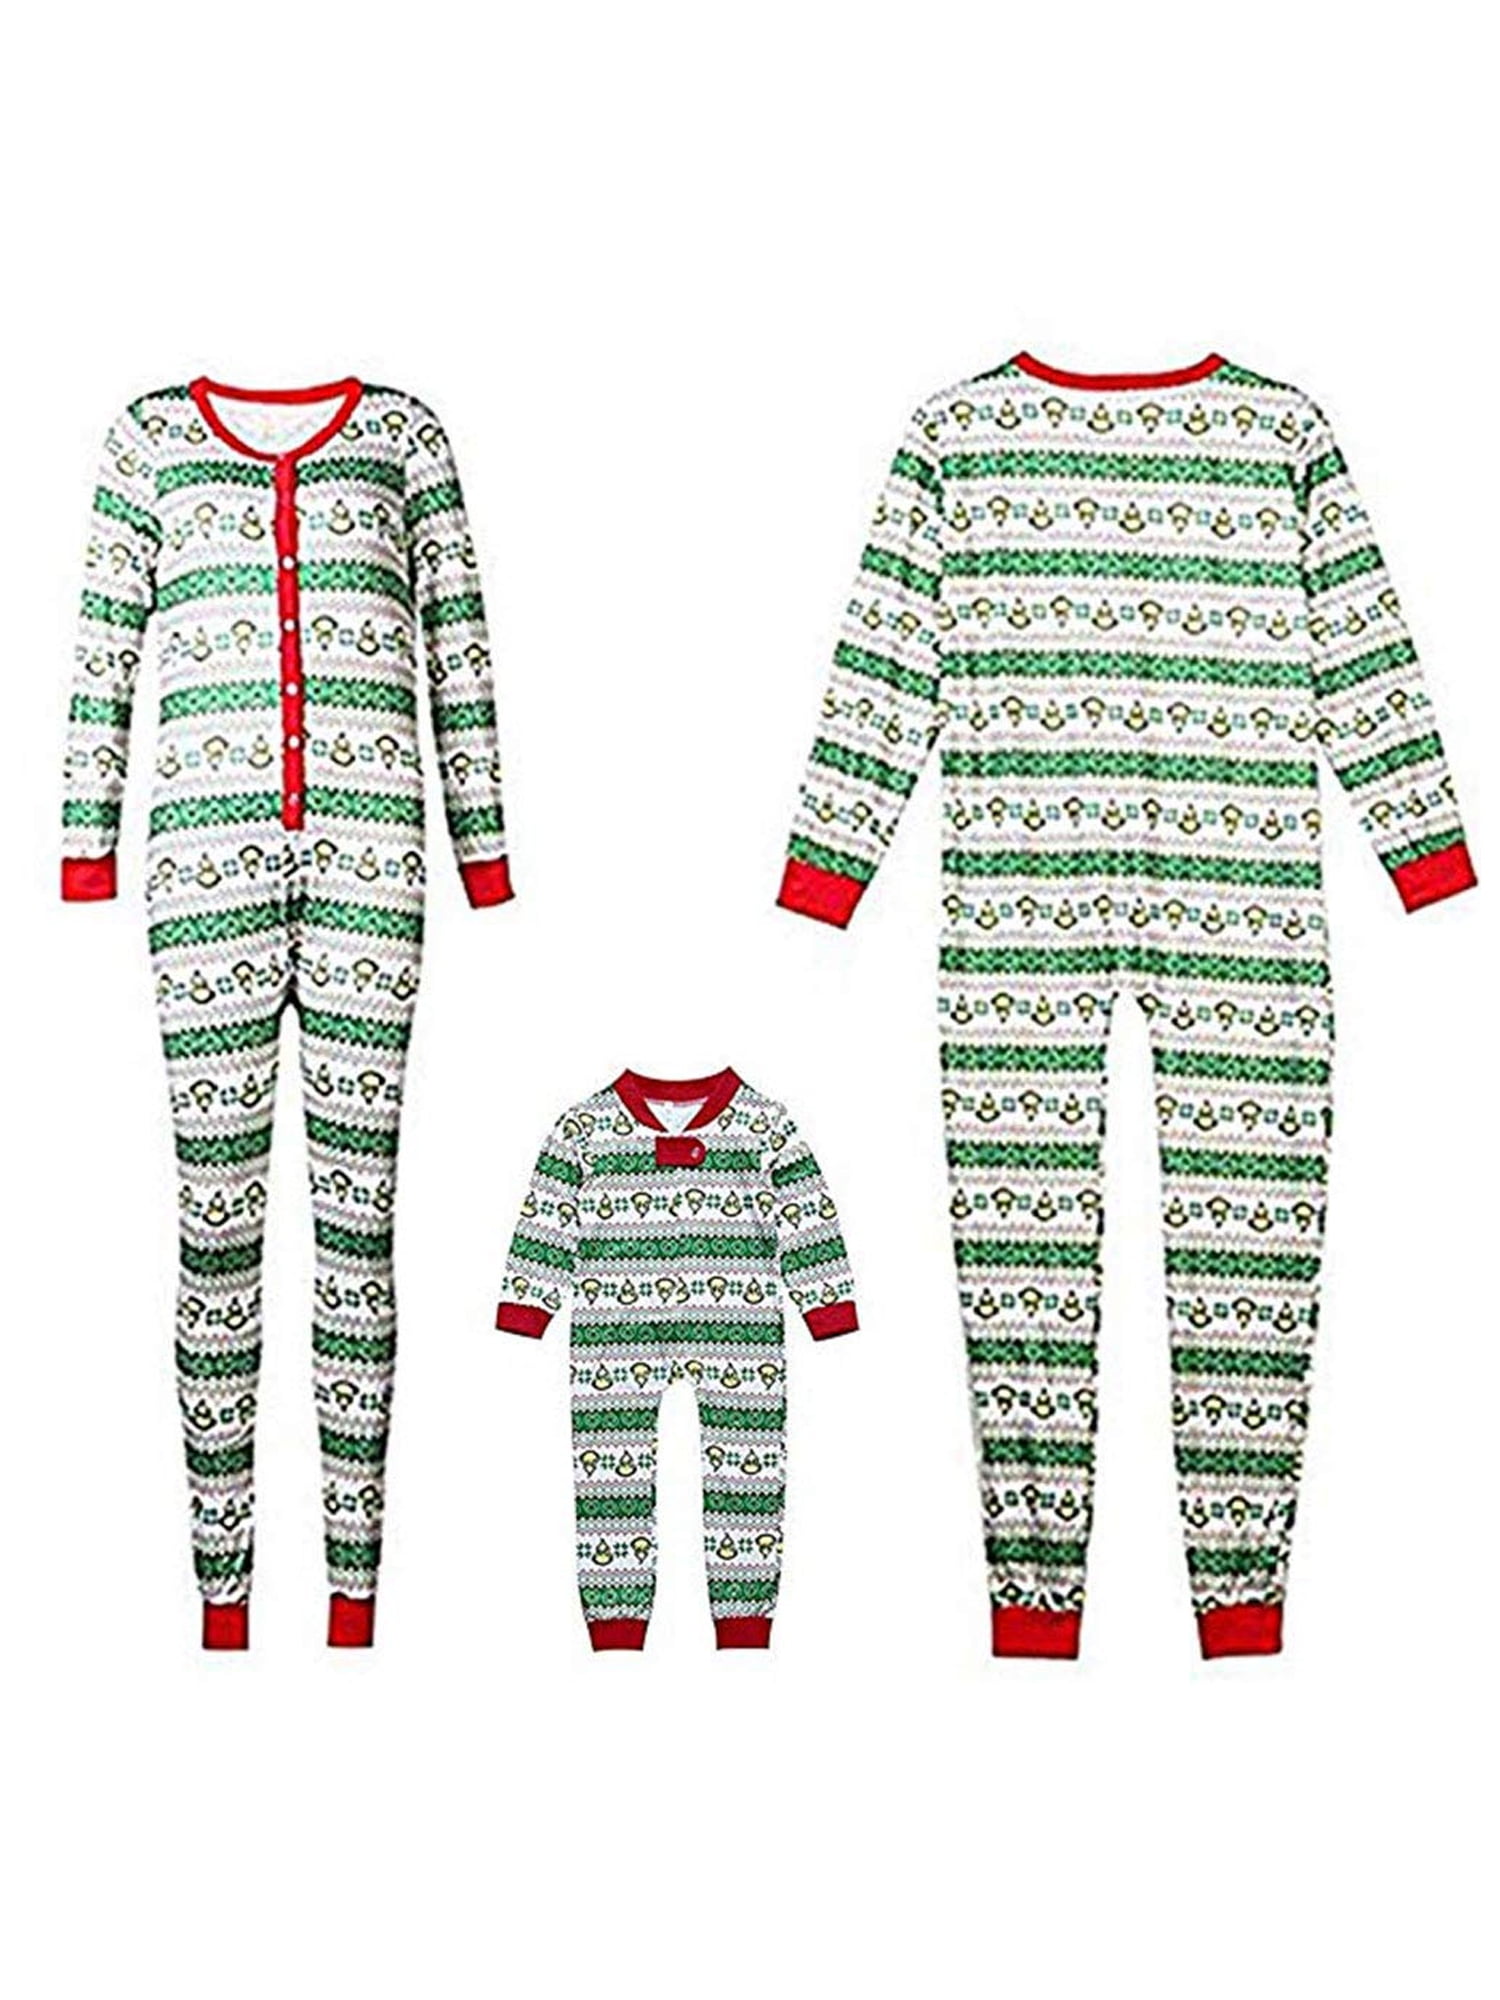 Meijunter Children Boys Girls Christmas Printing Sleepwear Famliy Cotton Pajamas